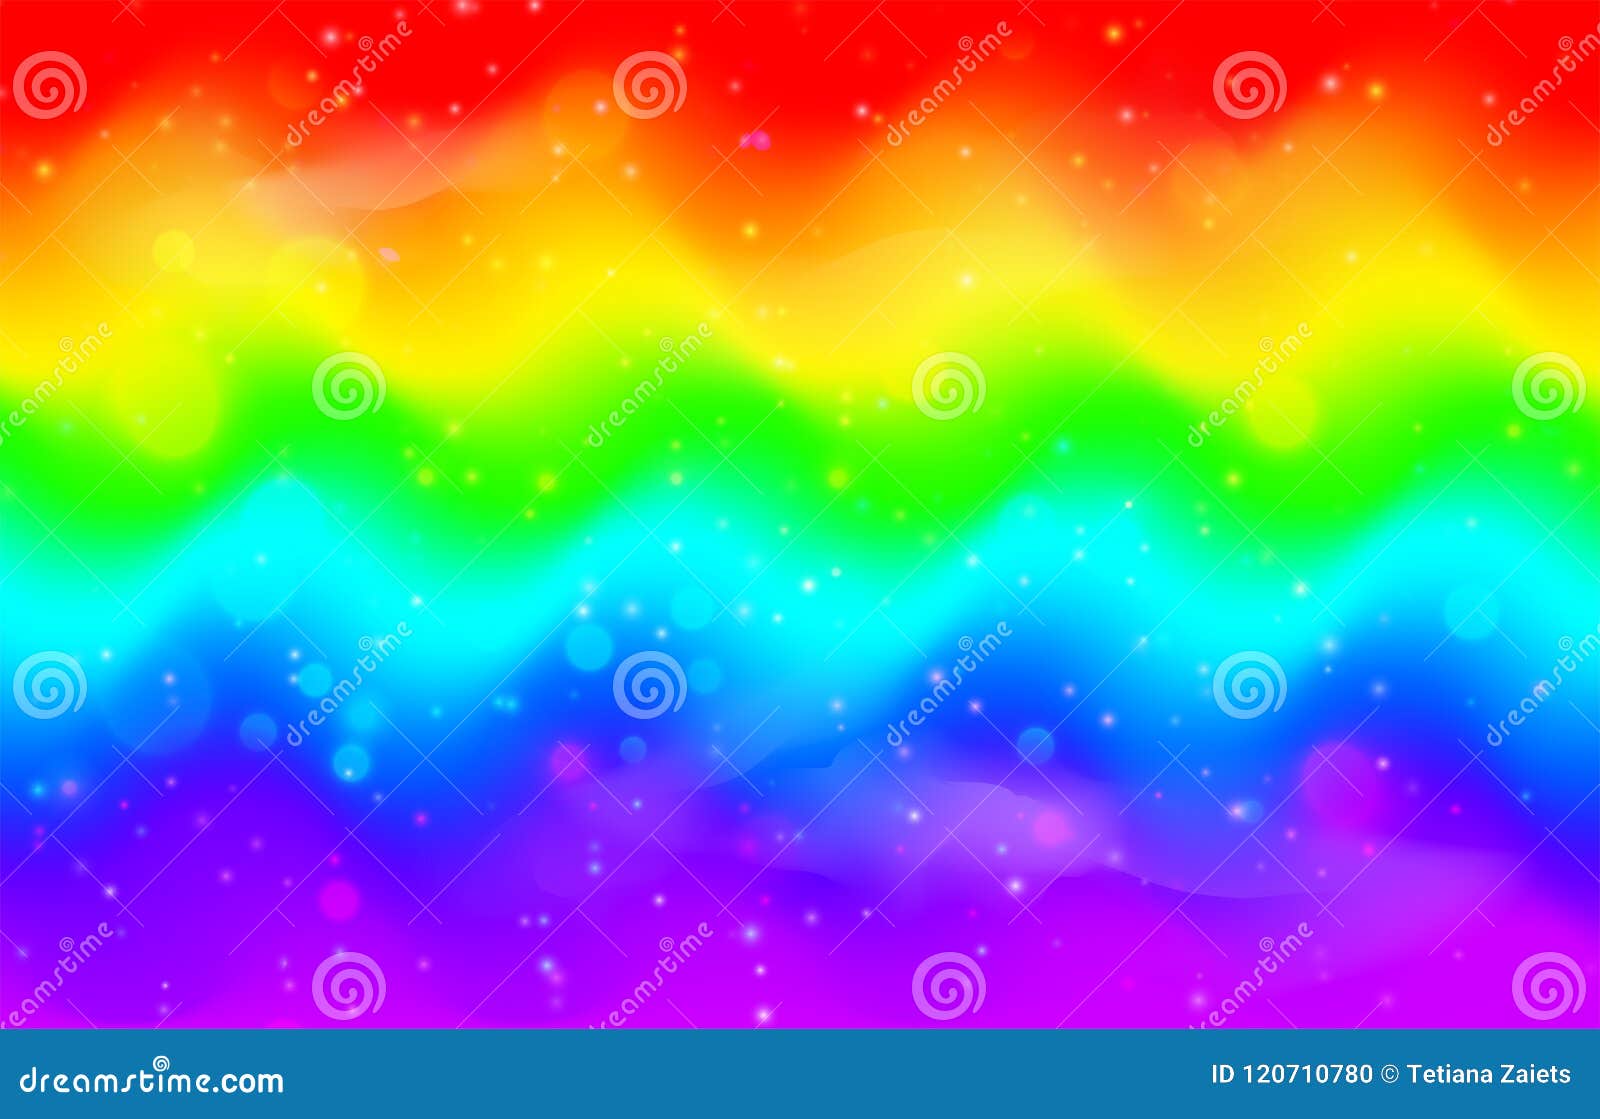 Rainbow Wave Background Mermaid Unicorn Galaxy Pattern With Shiny